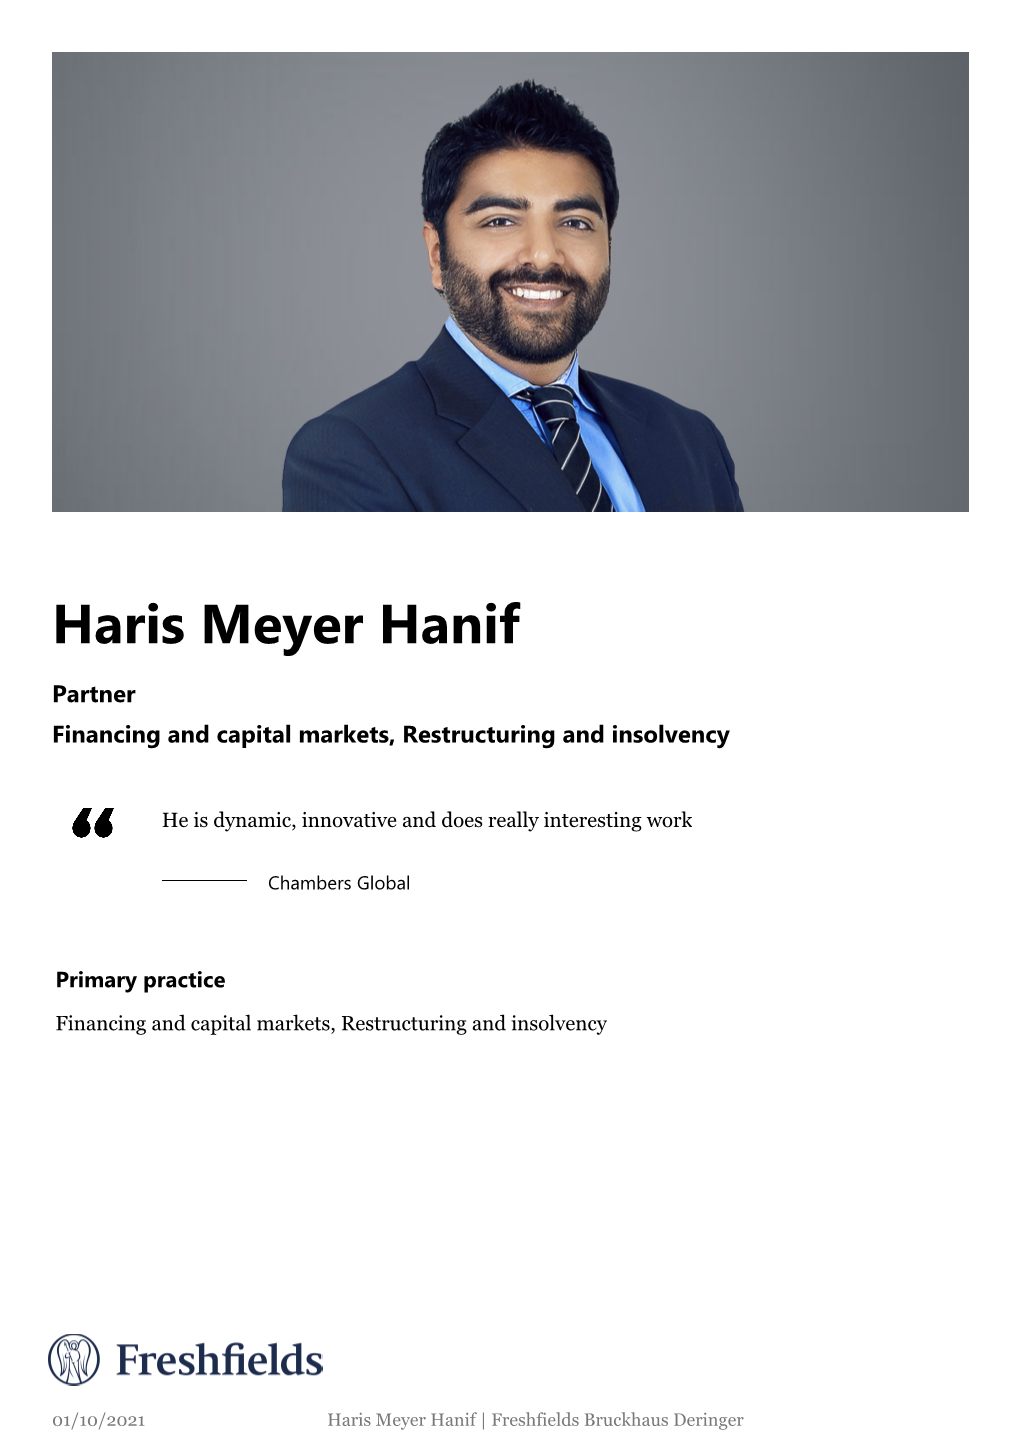 Haris Meyer Hanif